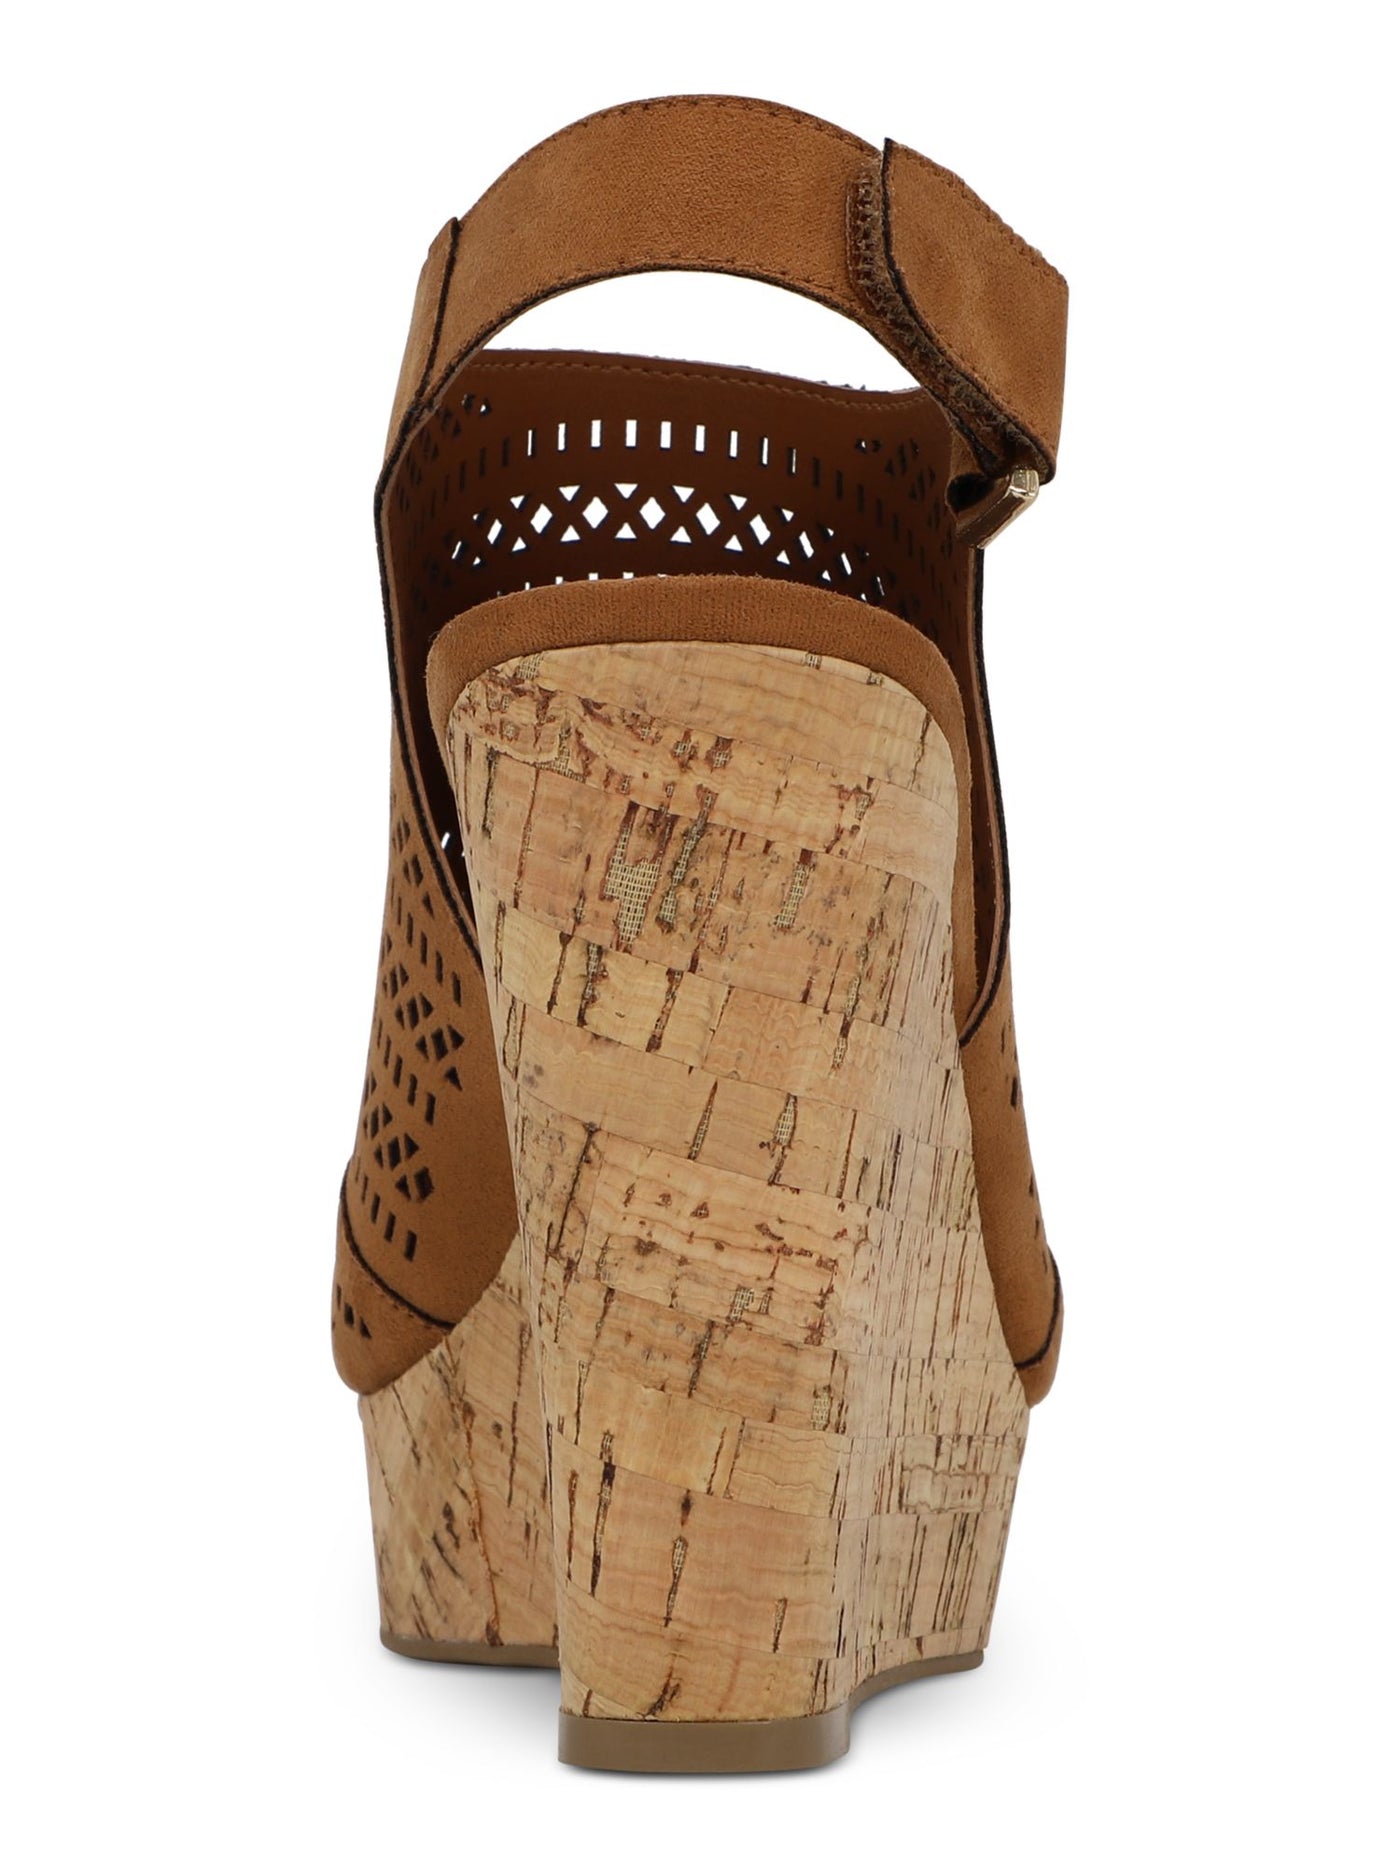 SUN STONE Womens Brown Cork Covered Heel Slip Resistant Peep Toe Wedge Sling Back Sandals Shoes 5